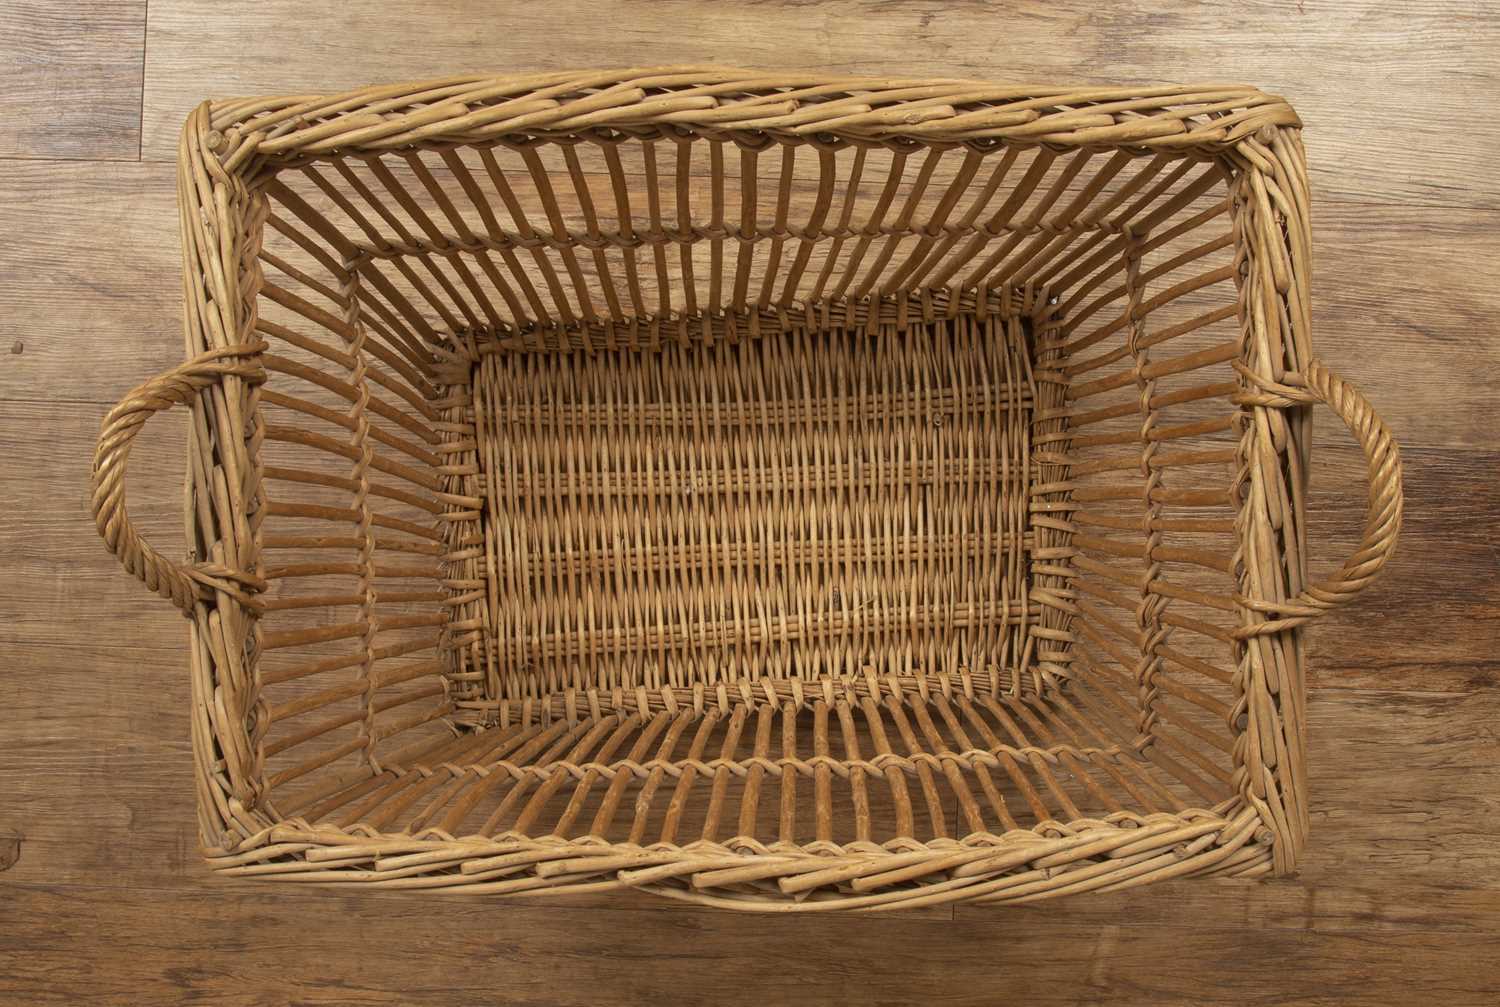 Wicker basket 20th Century, handmade with twin loop handles, 70cm wide x 31cm high x 46cm deepAt - Image 2 of 4